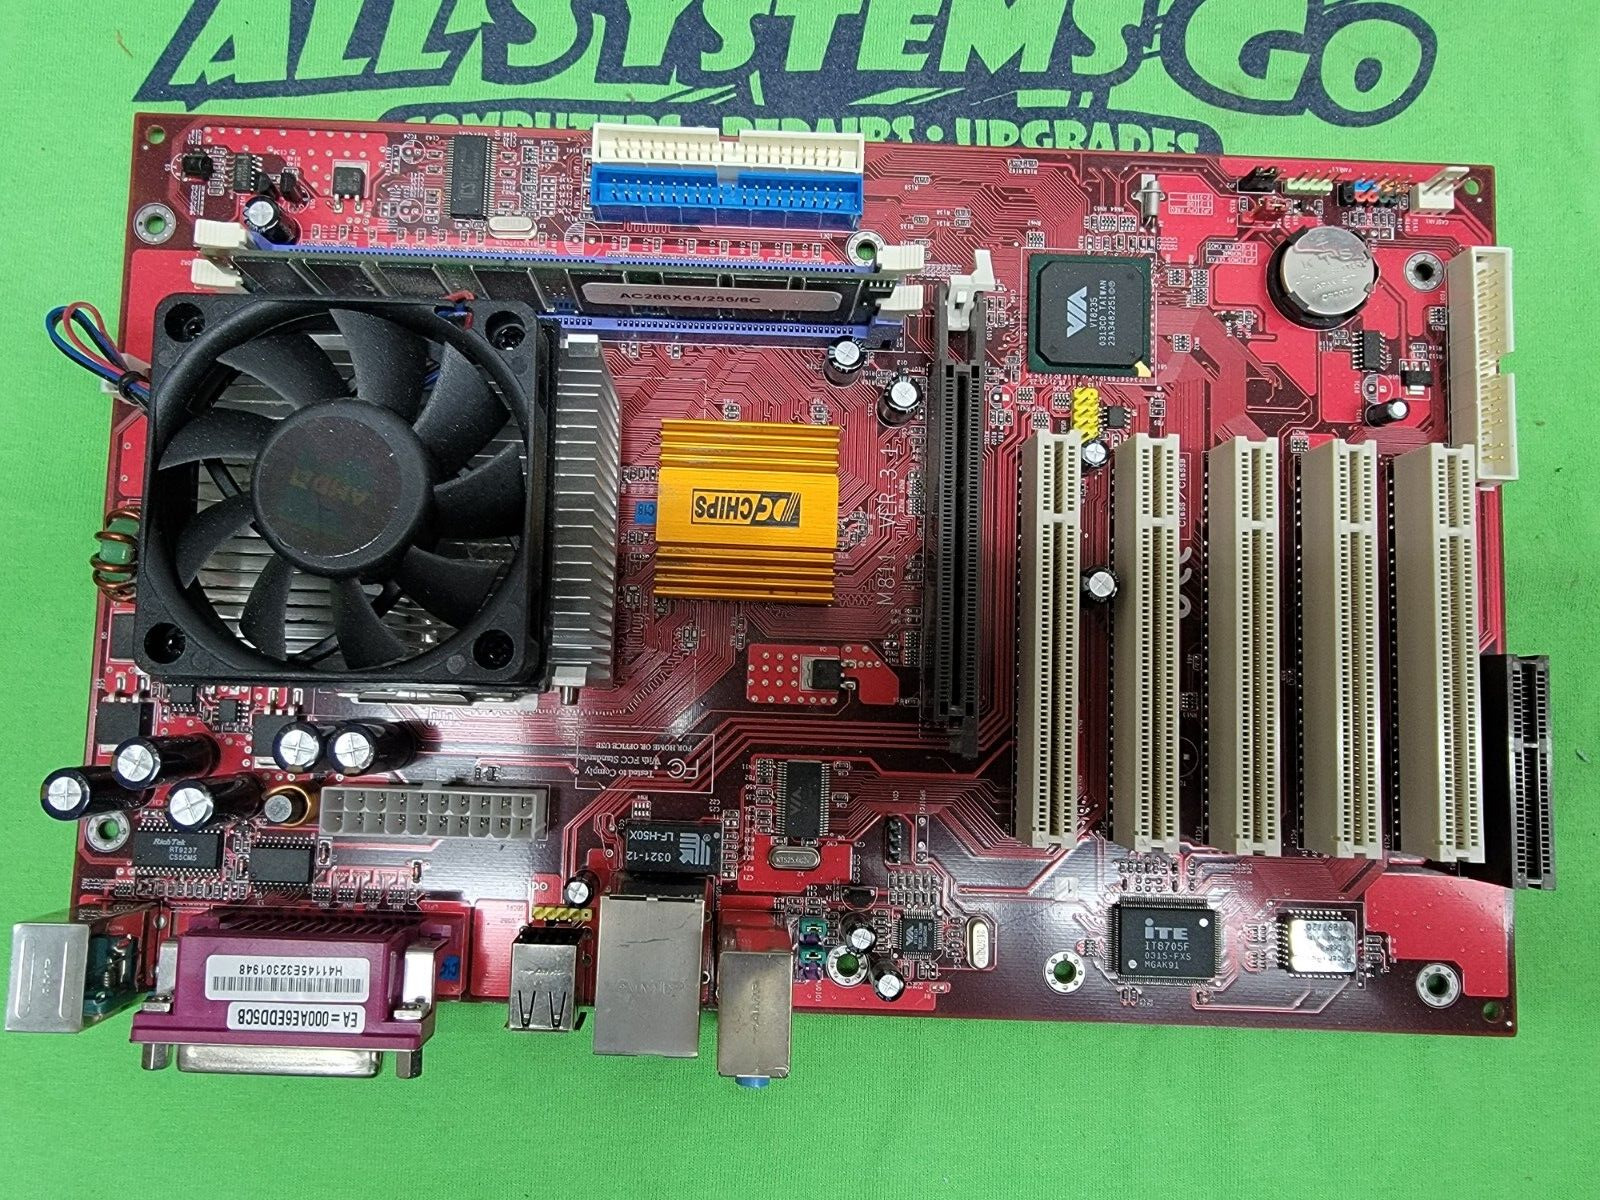 PC Chips M811 V3.1 Socket 462/A ATX Motherboard, AMD XP2400+ & 256MB Ram